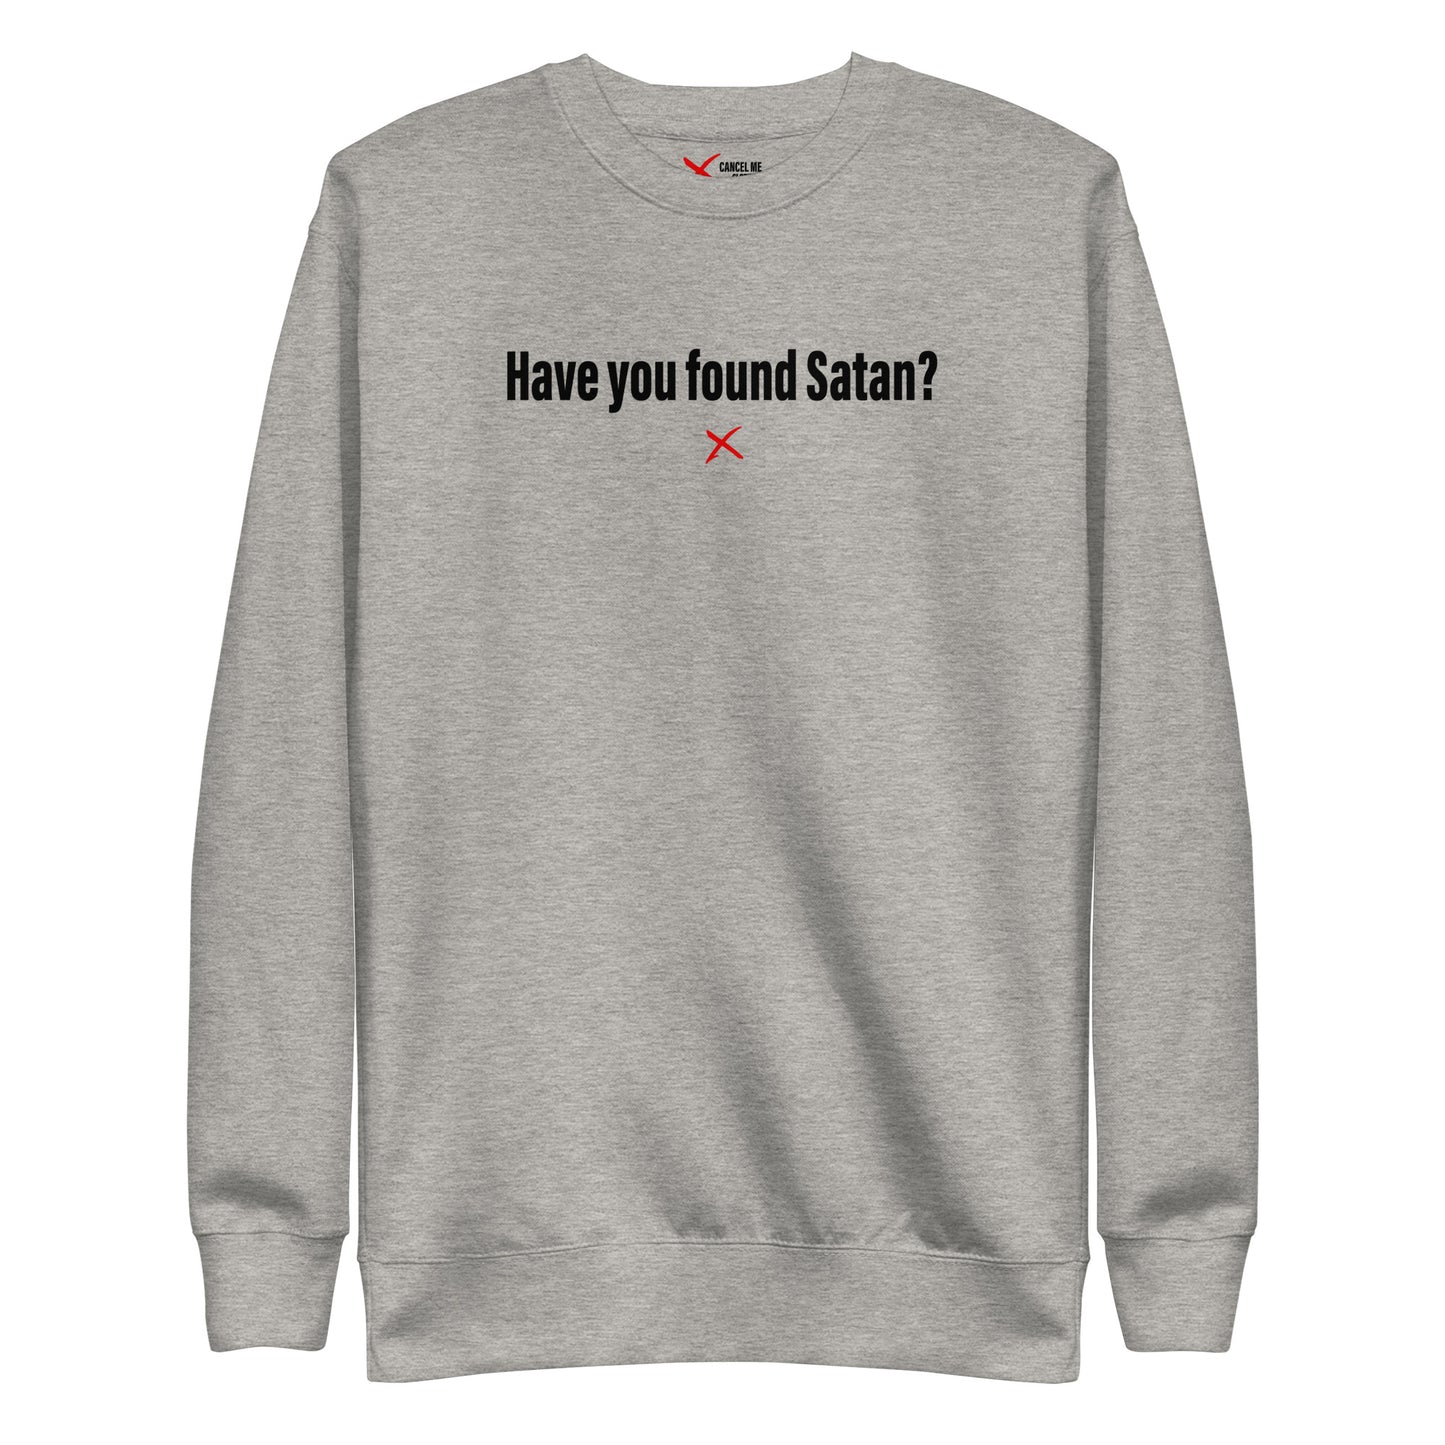 Have you found Satan? - Sweatshirt